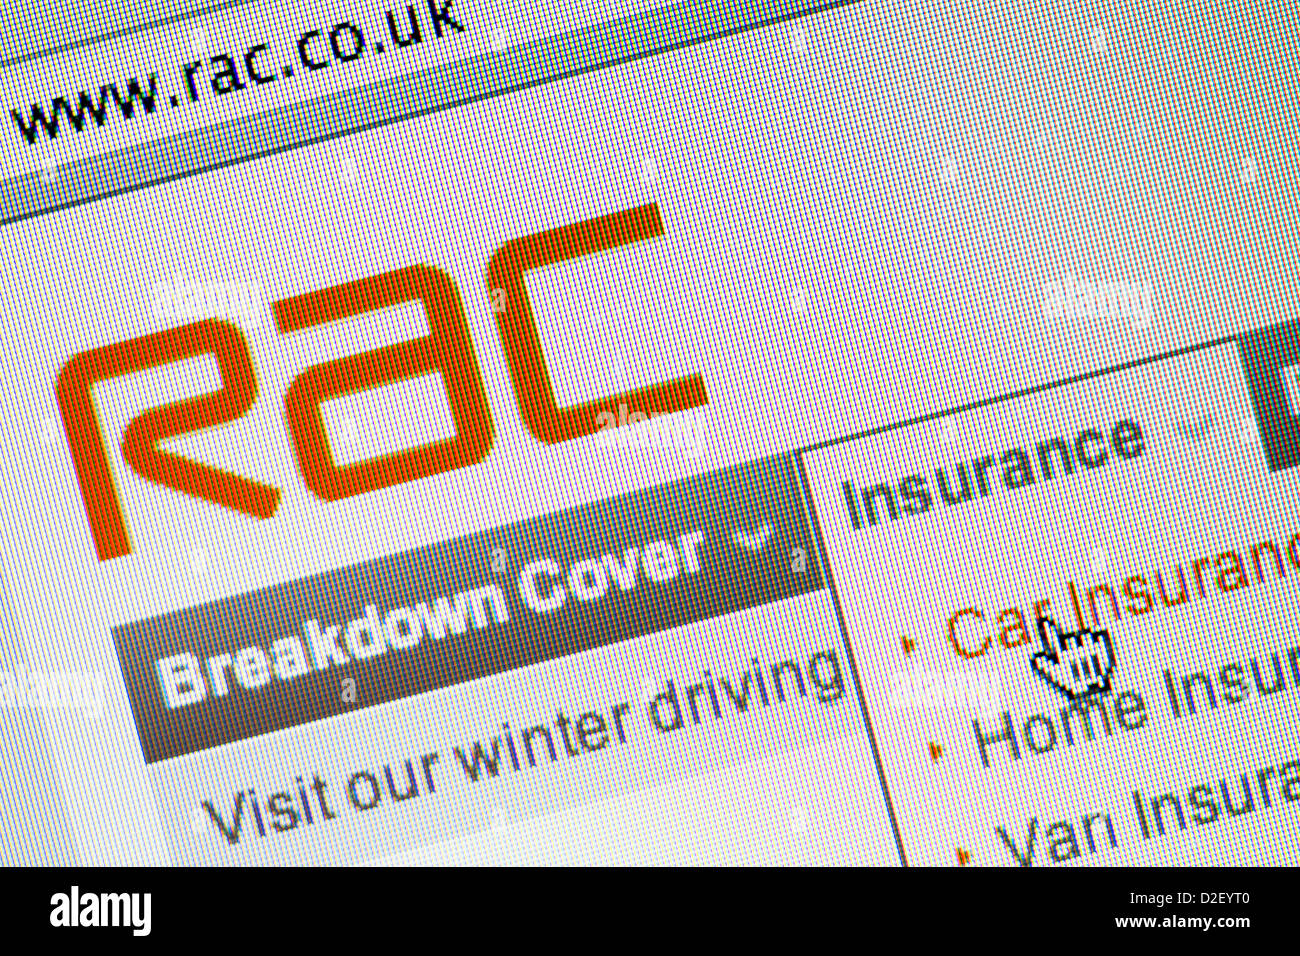 RAC logo and website close up Stock Photo